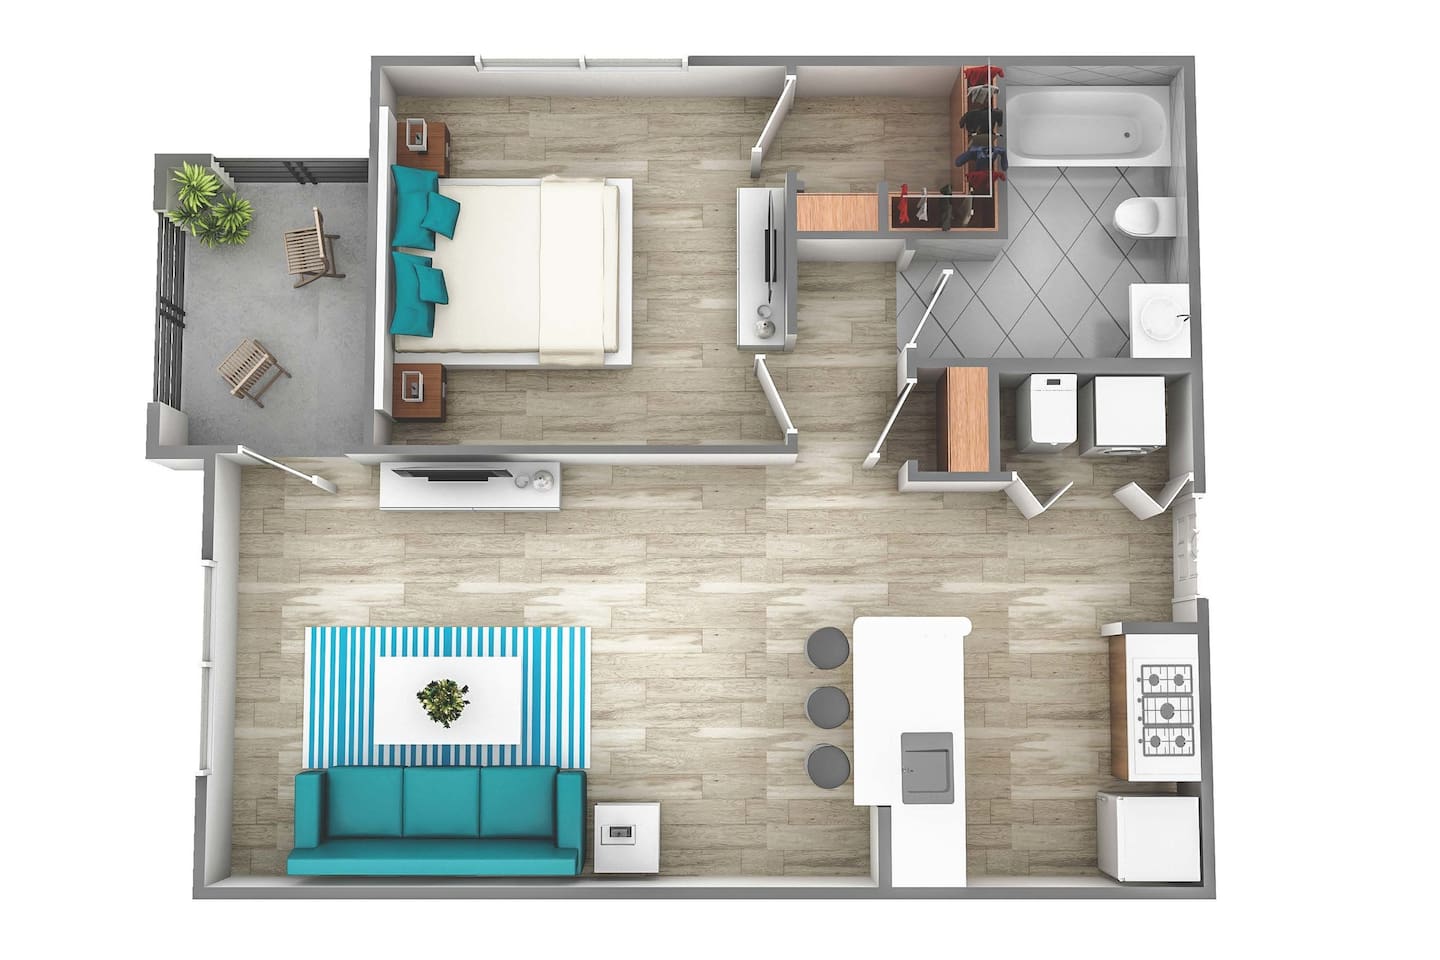 Floorplan diagram for One Bedroom One Bath (633 SF), showing 1 bedroom